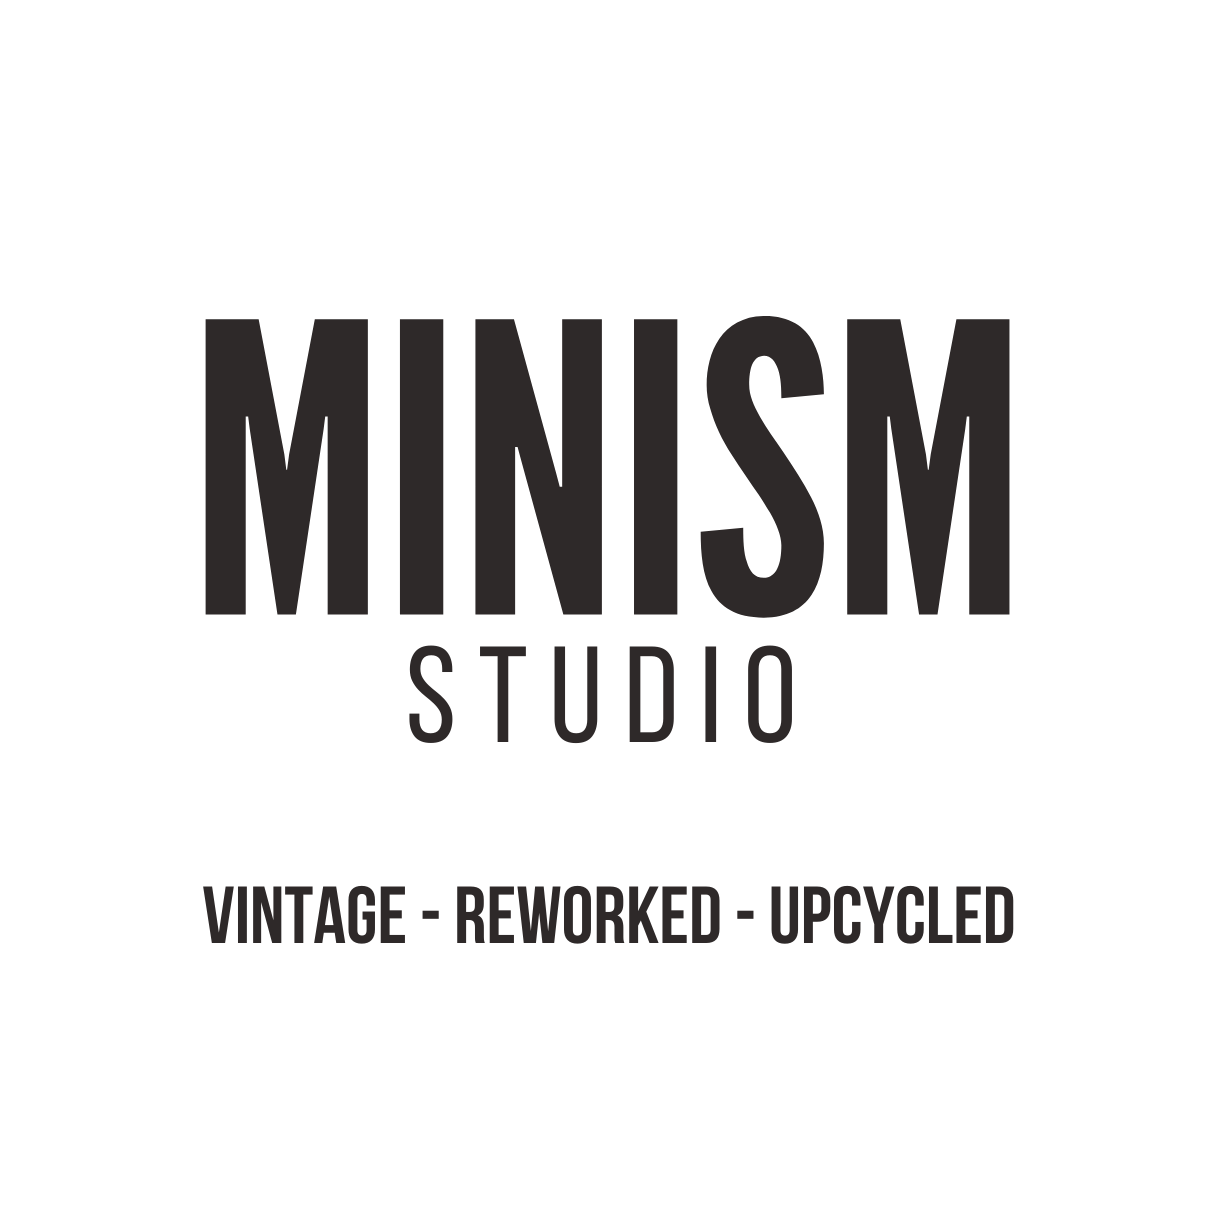 MINISM STUDIO